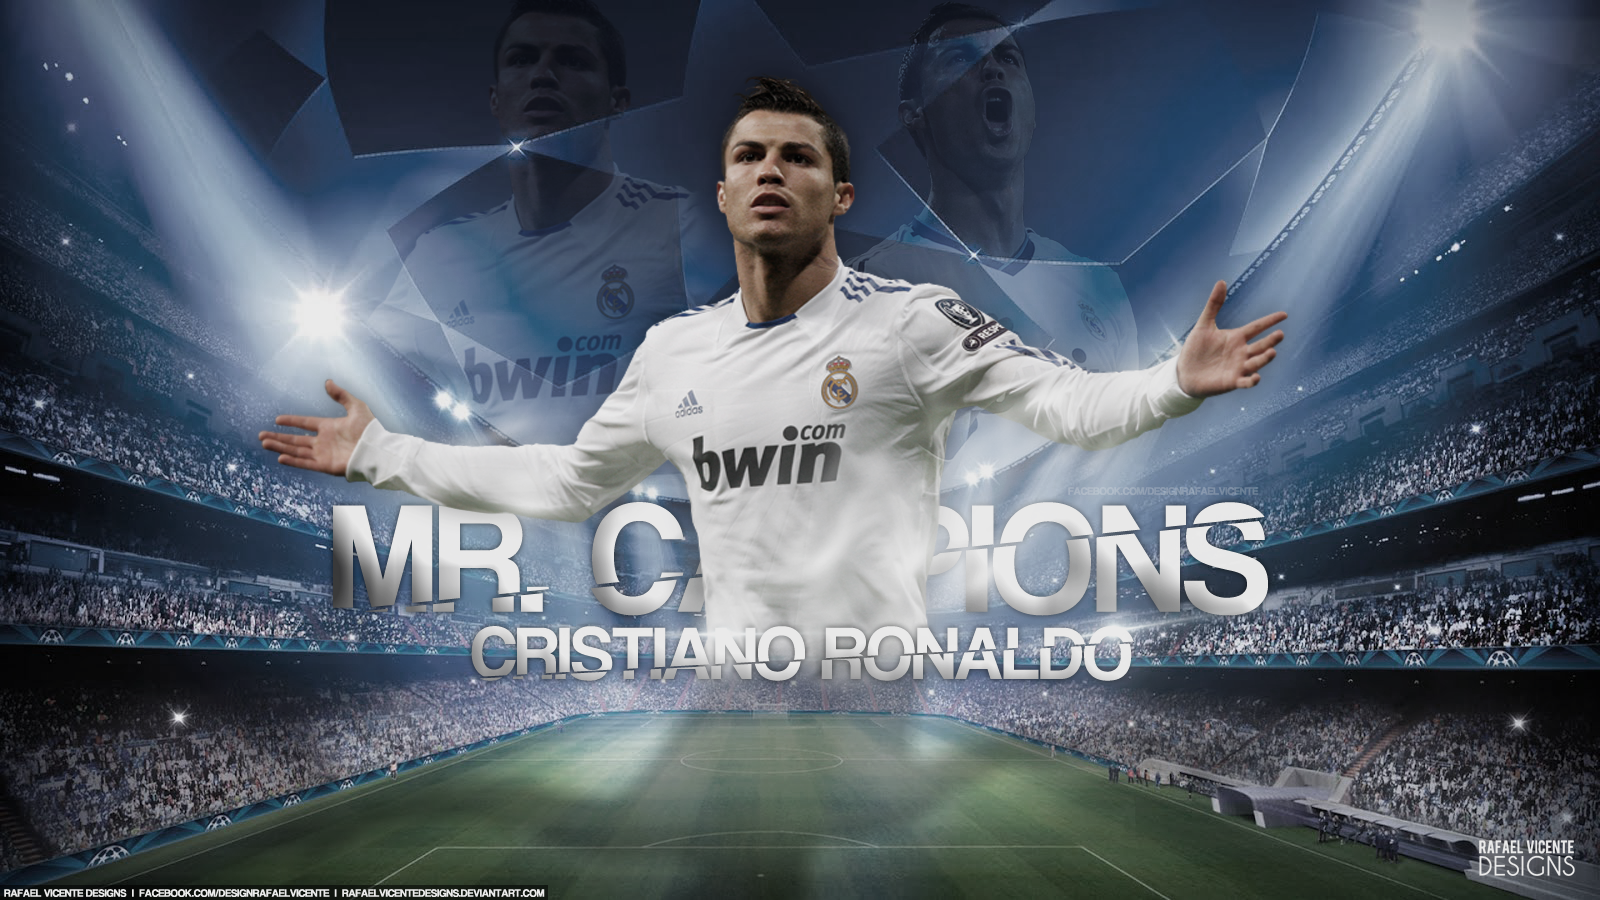 Mr.Champions Cristiano Ronaldo wallpaper by RafaelVicenteDesigns on DeviantArt